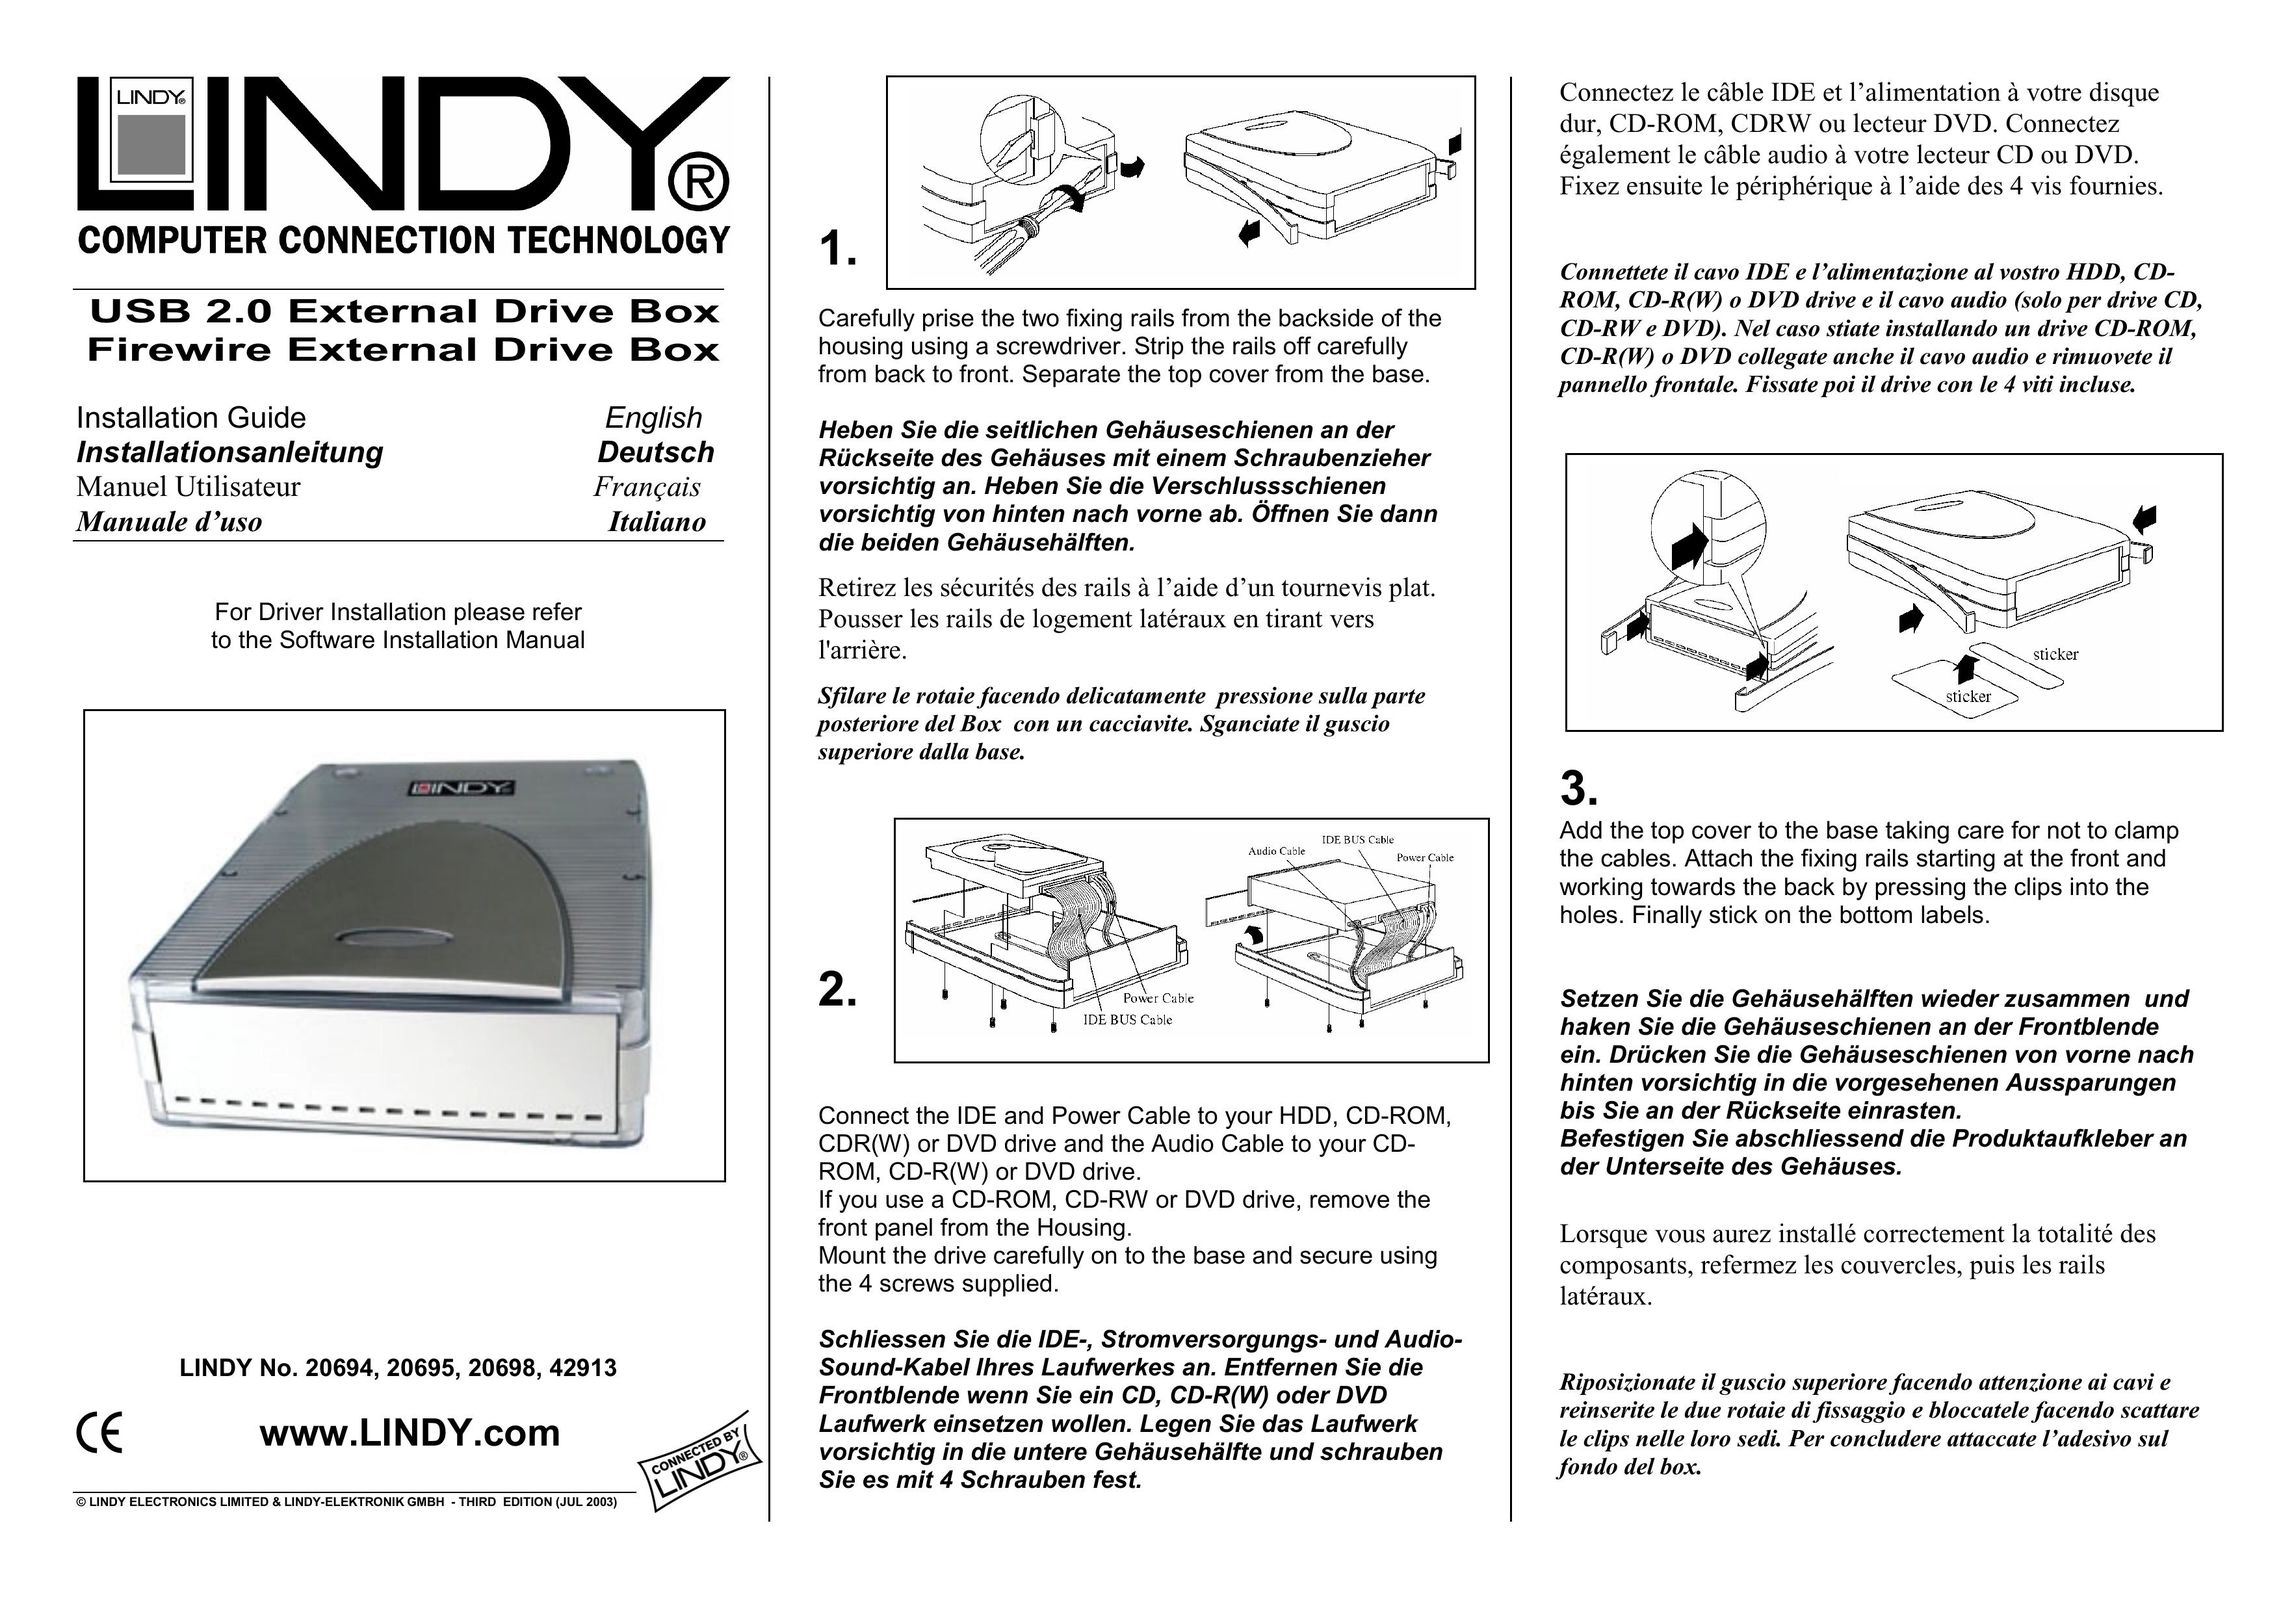 Lindy 20695 Computer Drive User Manual